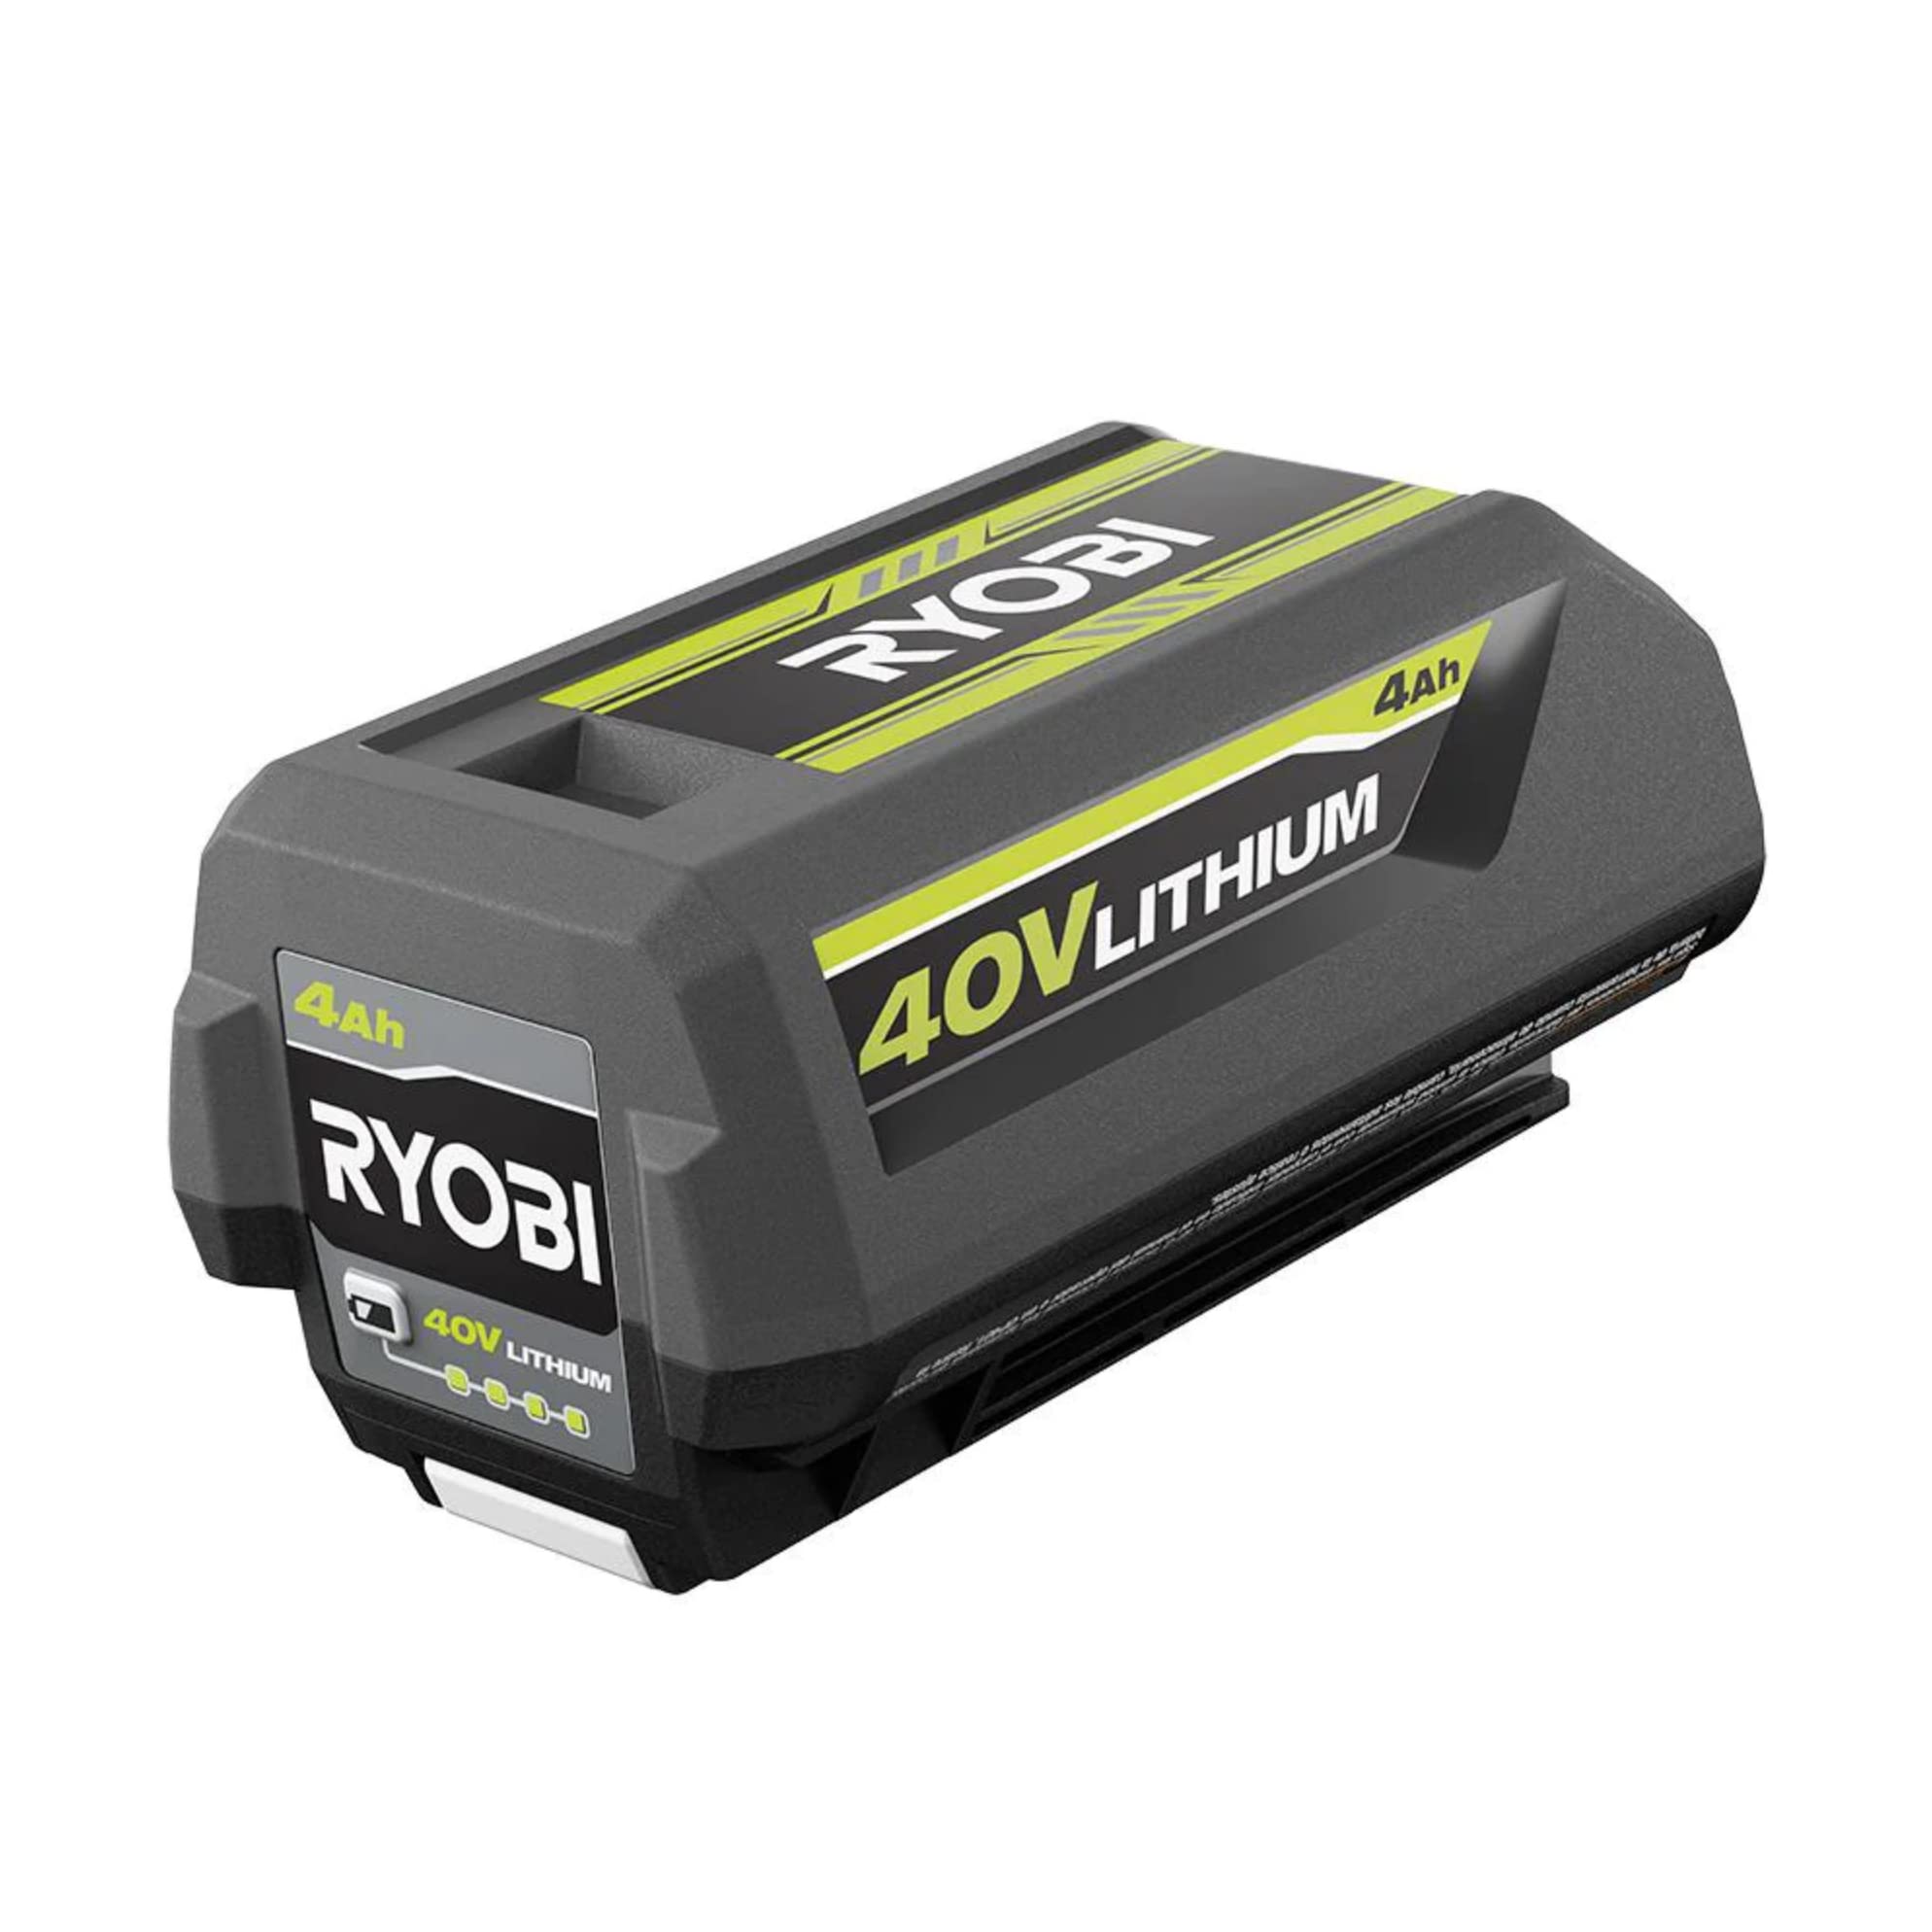 Ryobi 40V 4.0 Ah Lithium-Ion Battery OP4040